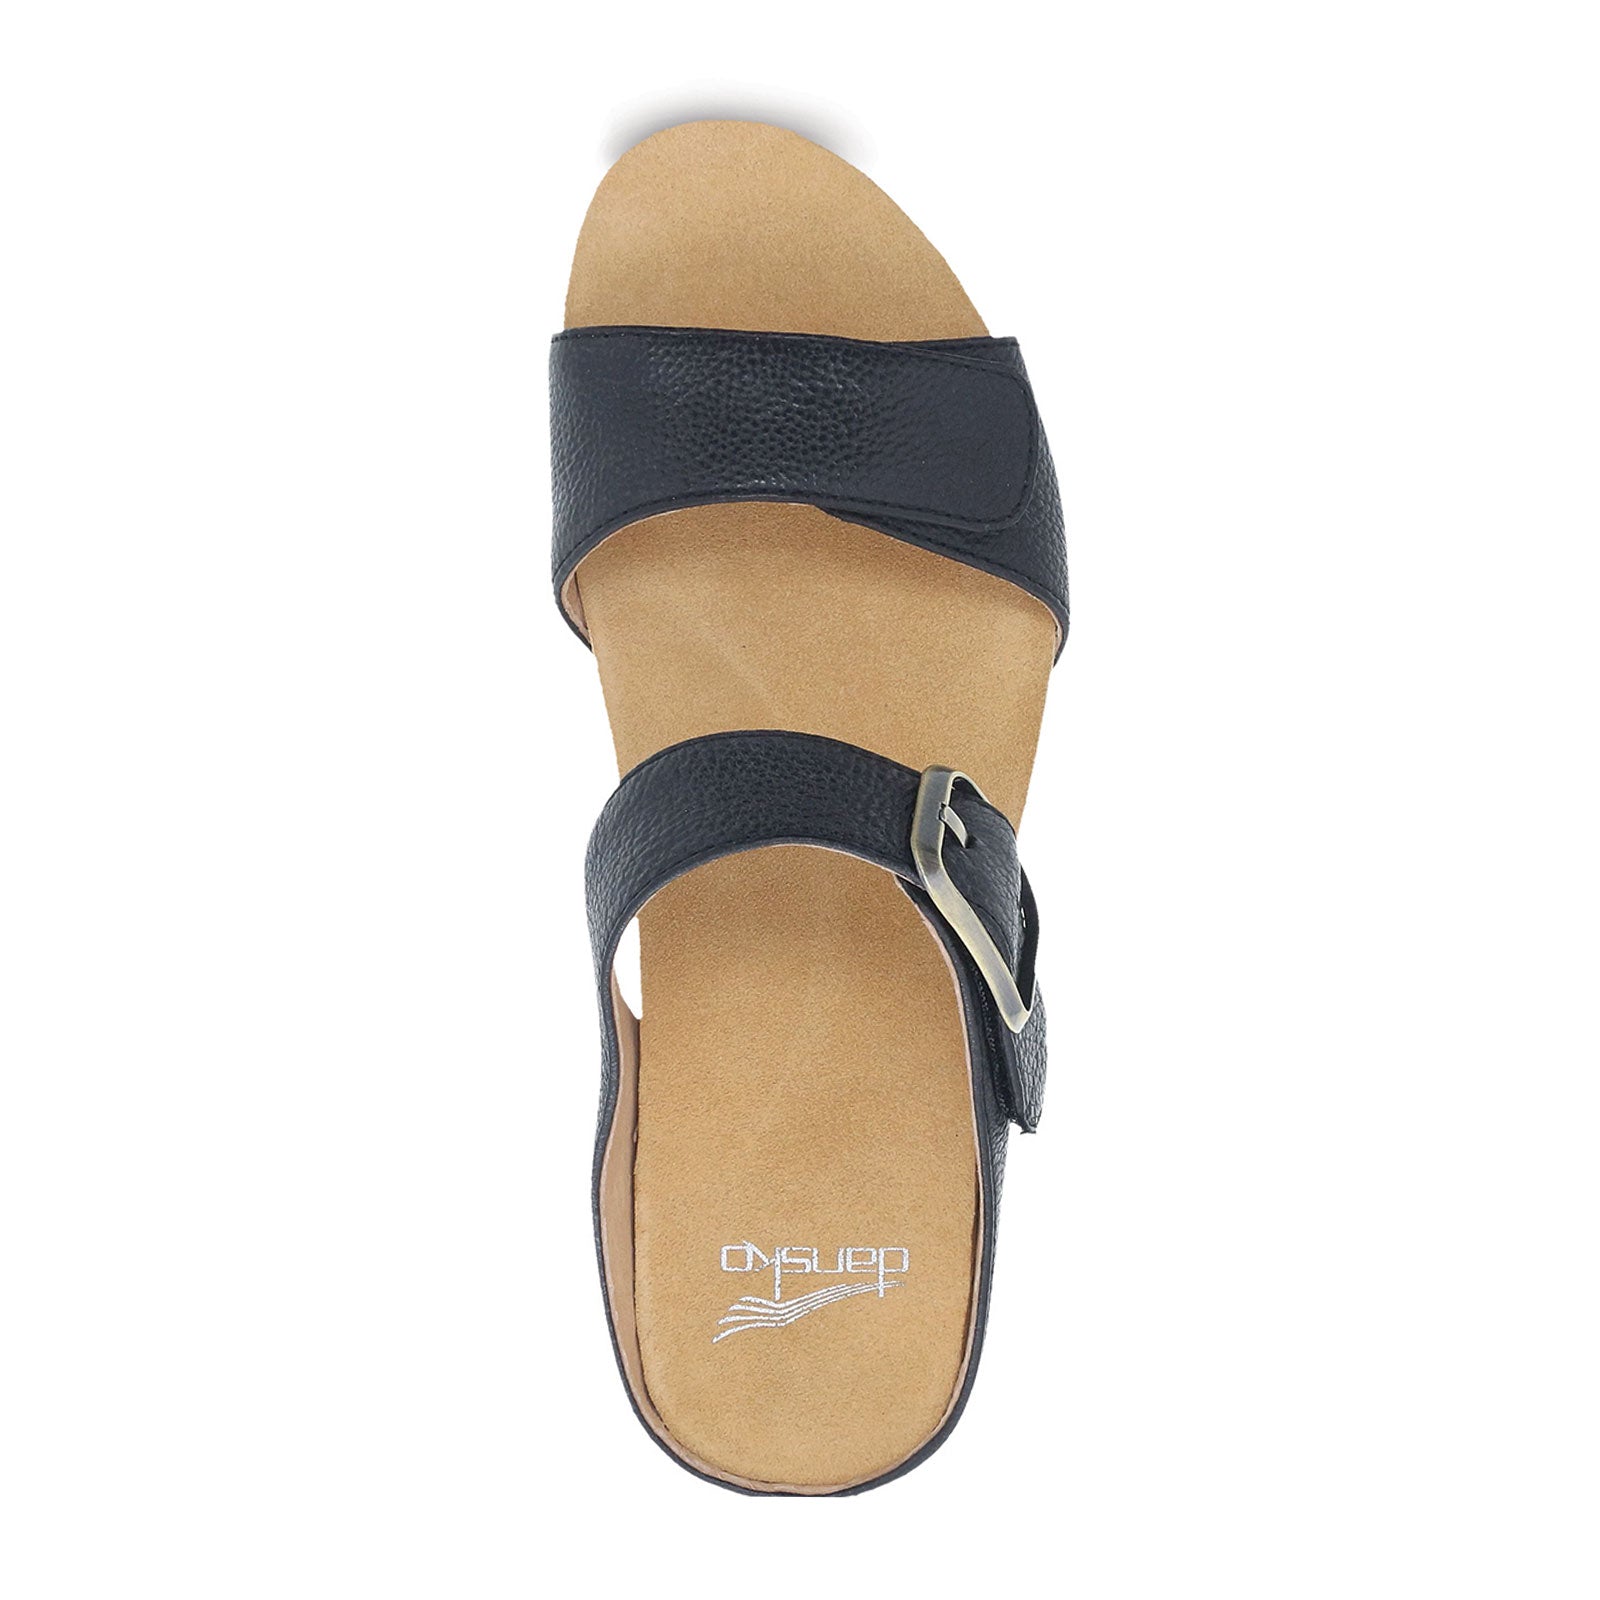 Dansko Tanya Wedge Sandal (Women) - Black Milled Burnished Sandals - Wedge - The Heel Shoe Fitters